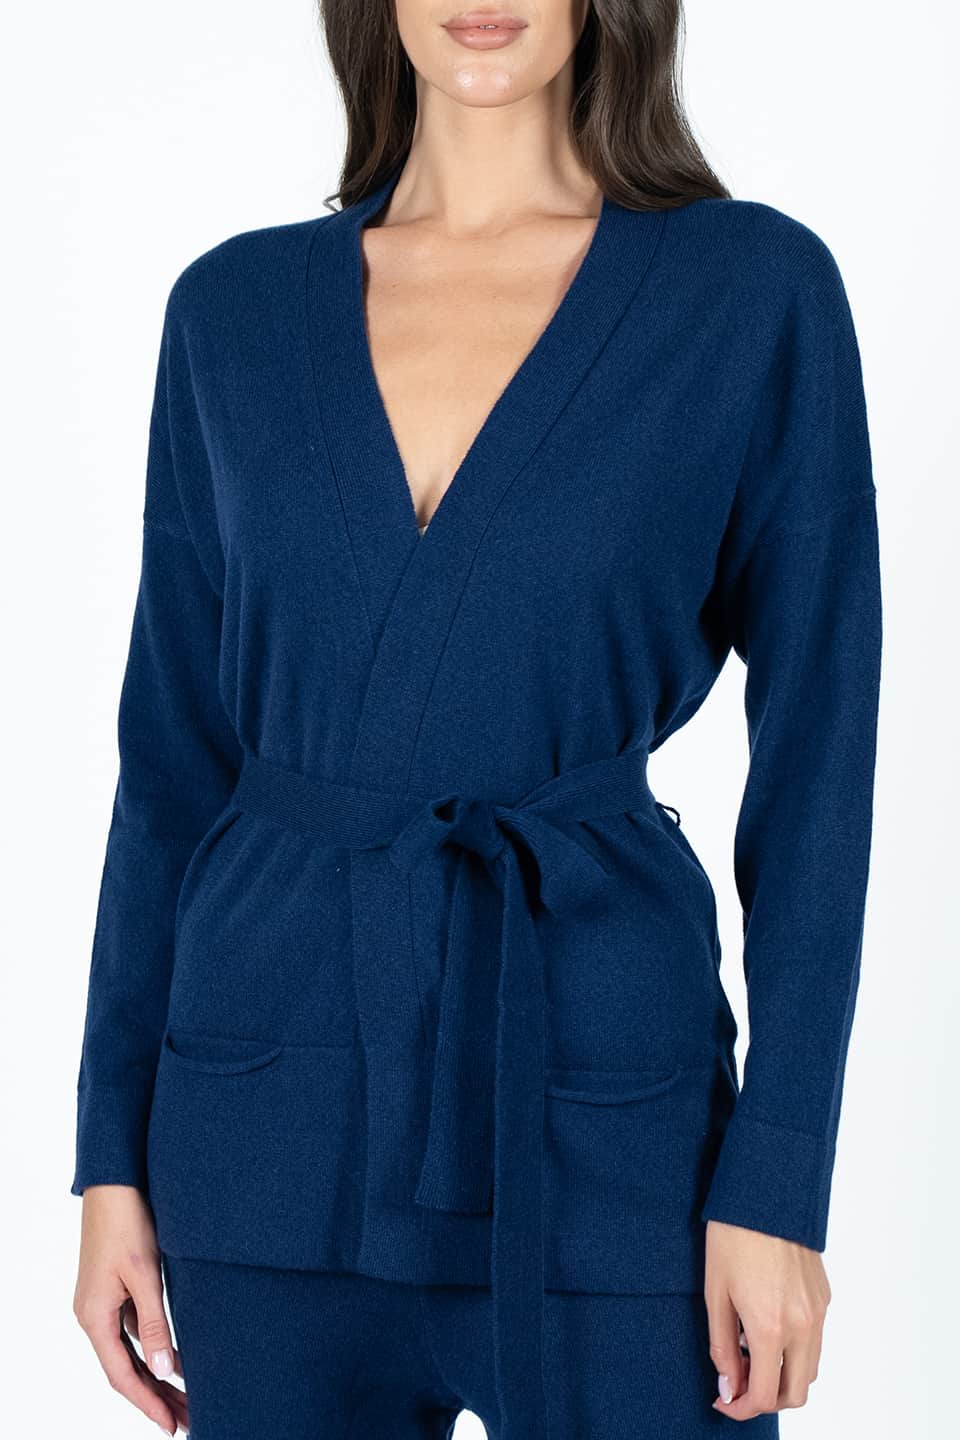 Shop online trendy Blue Women long sleeve from Vivetta Fashion designer. Product gallery 1